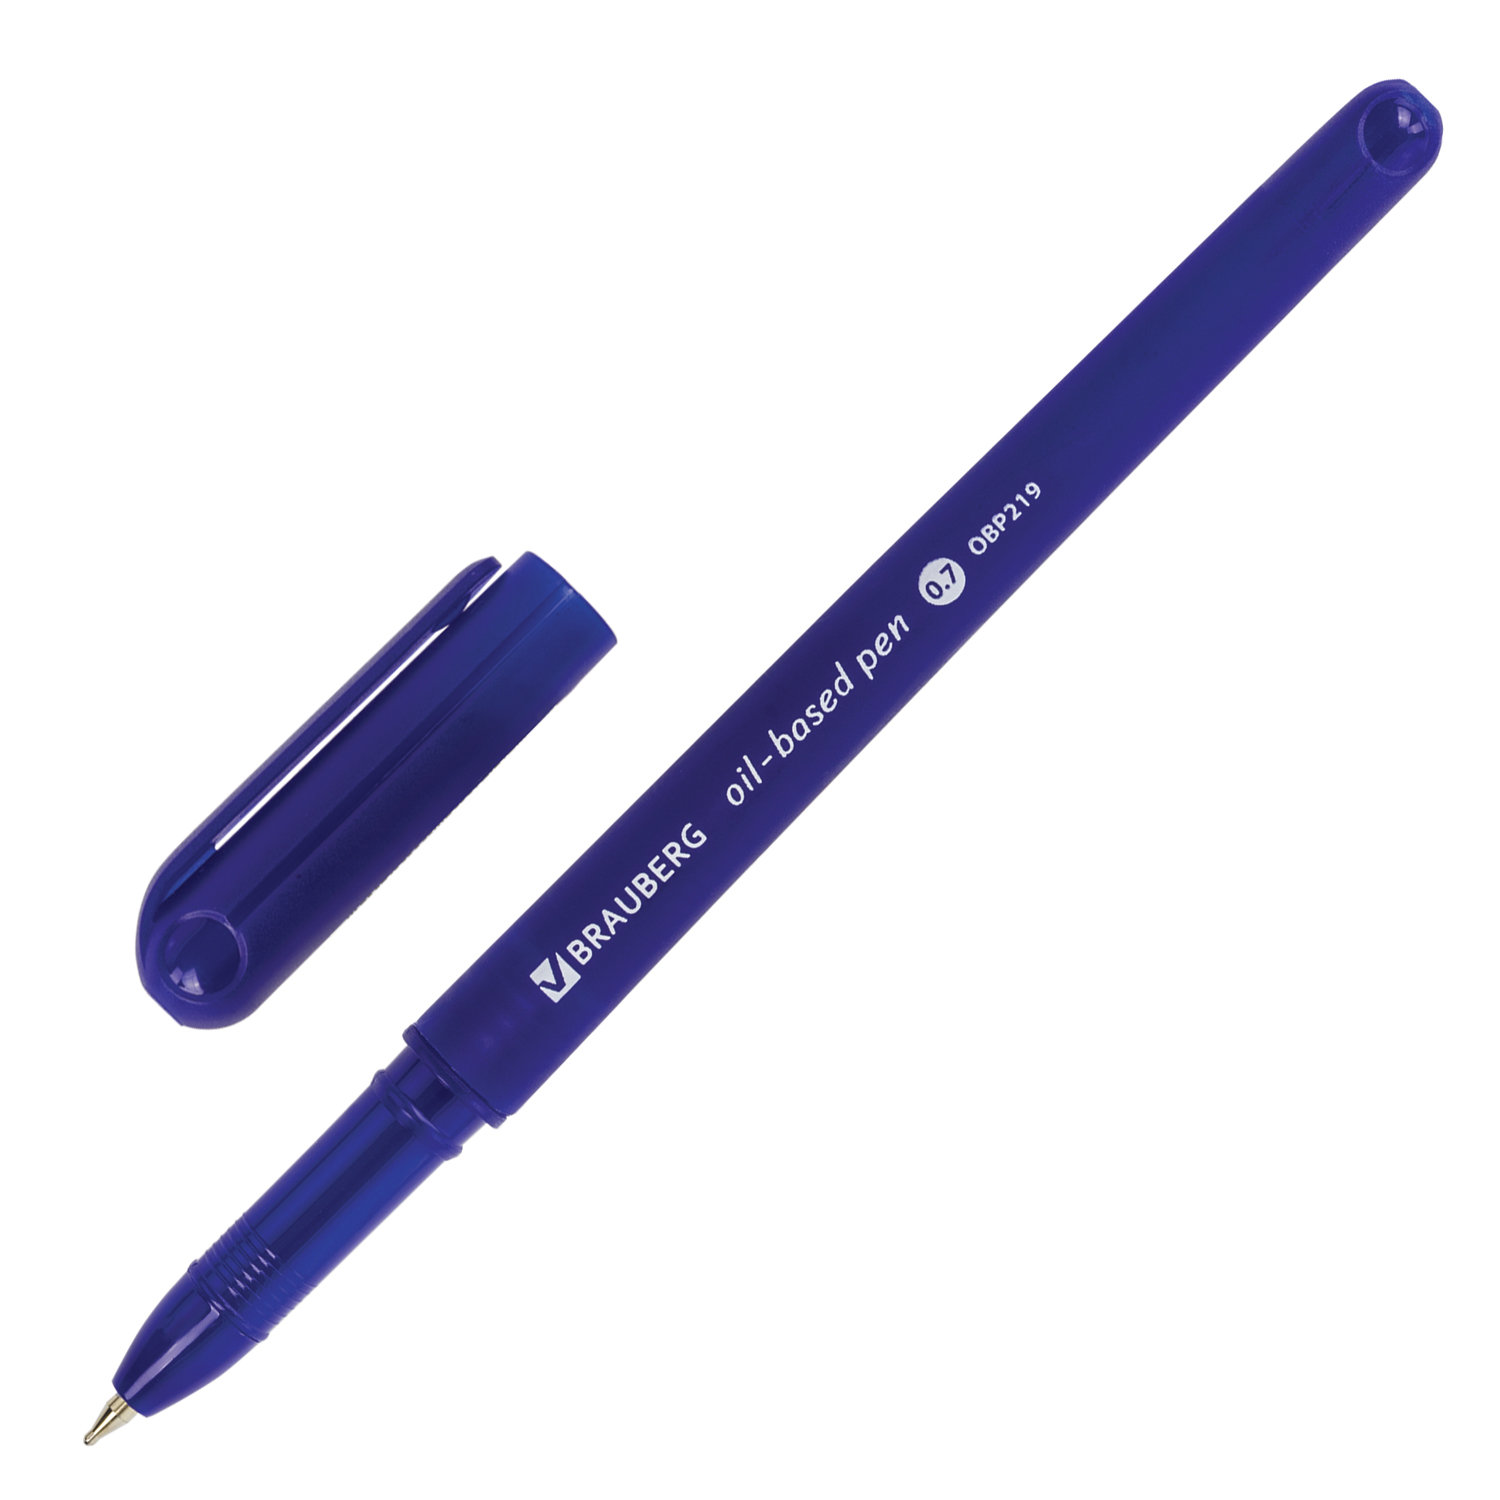 Brauberg 0.7. Ручка БРАУБЕРГ шариковая синий корпус. Ручка шариковая синяя БРАУБЕРГ. Ручка БРАУБЕРГ 0.7 масляная. Ручка BRAUBERG Oil based Pen.